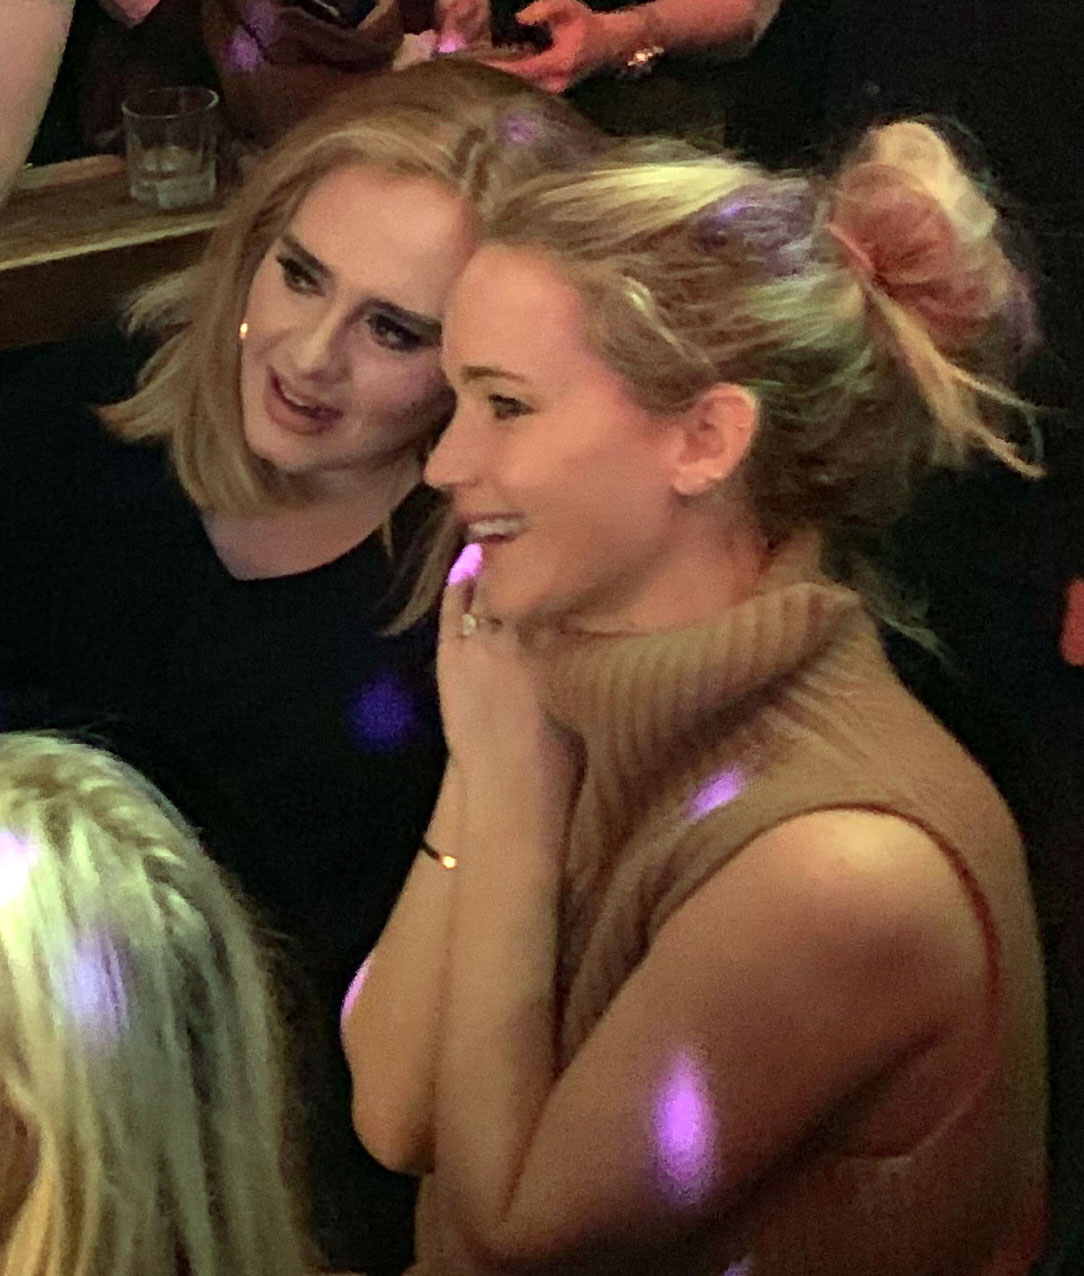 Girls' Night! Adele and Jennifer Lawrence Hit Up NYC Gay Bar